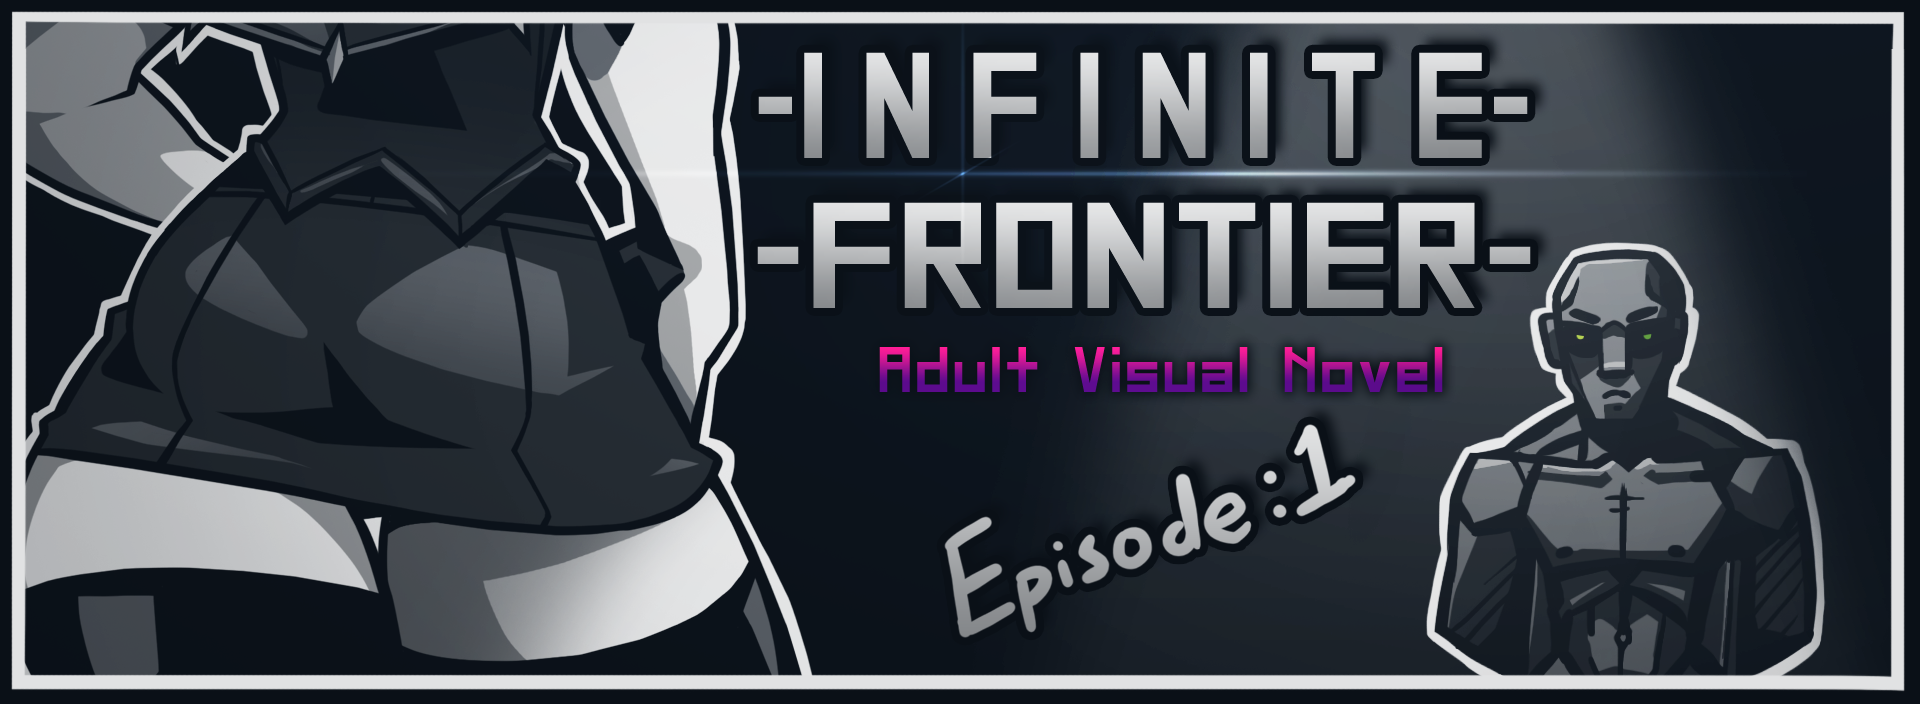 ::Infinite Frontier:: adult visual novel